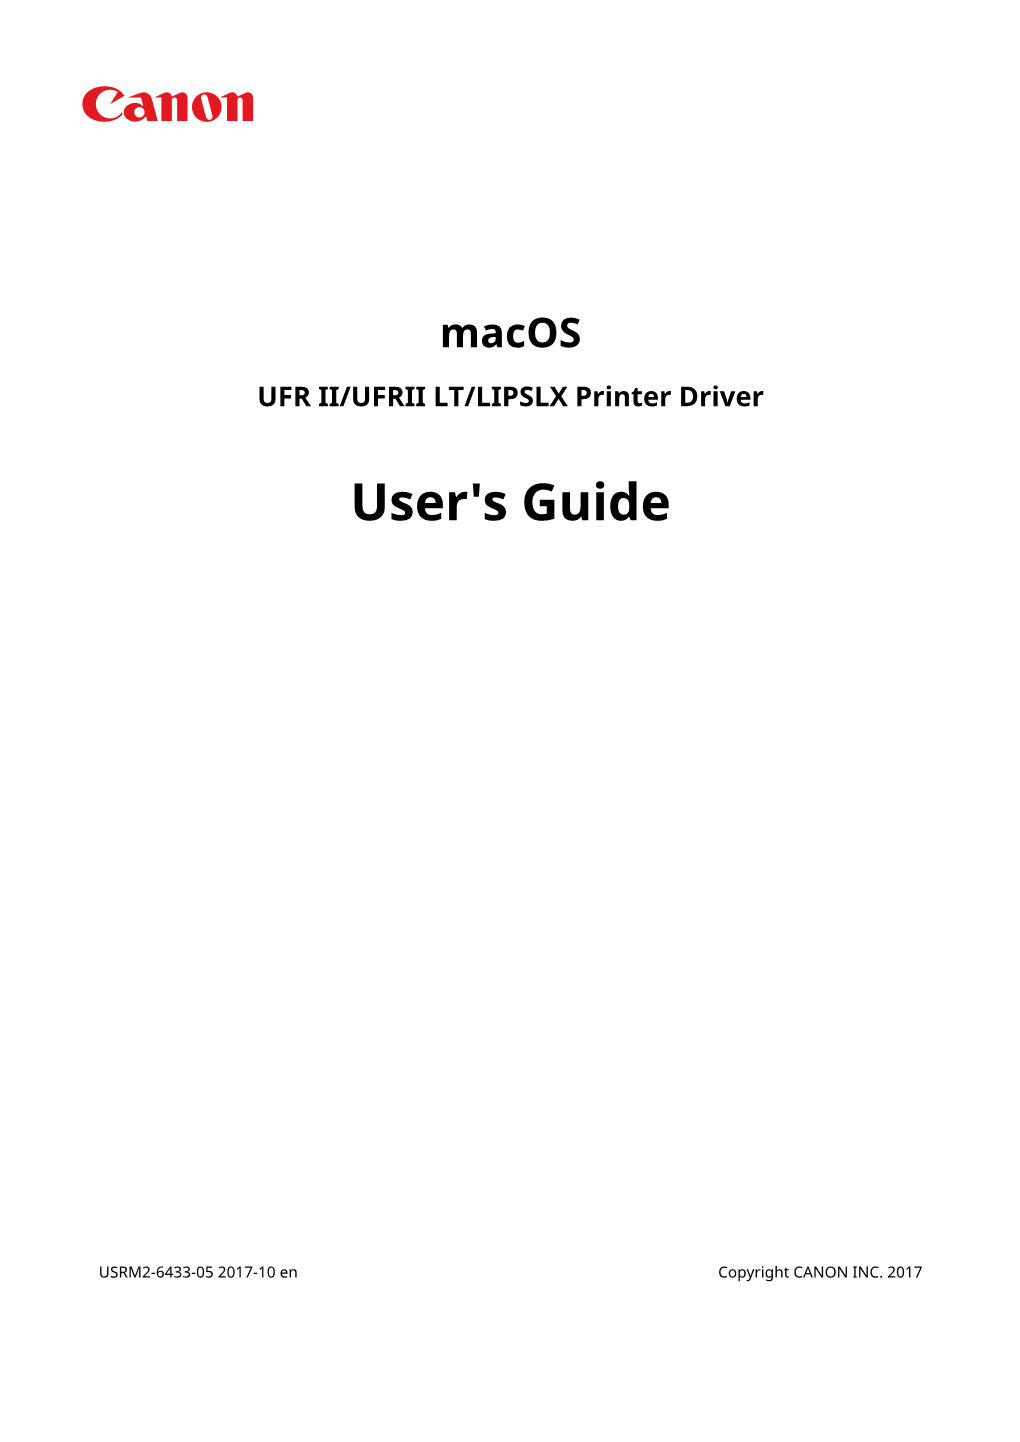 Macos UFR II/UFRII LT/LIPSLX Printer Driver User's Guide